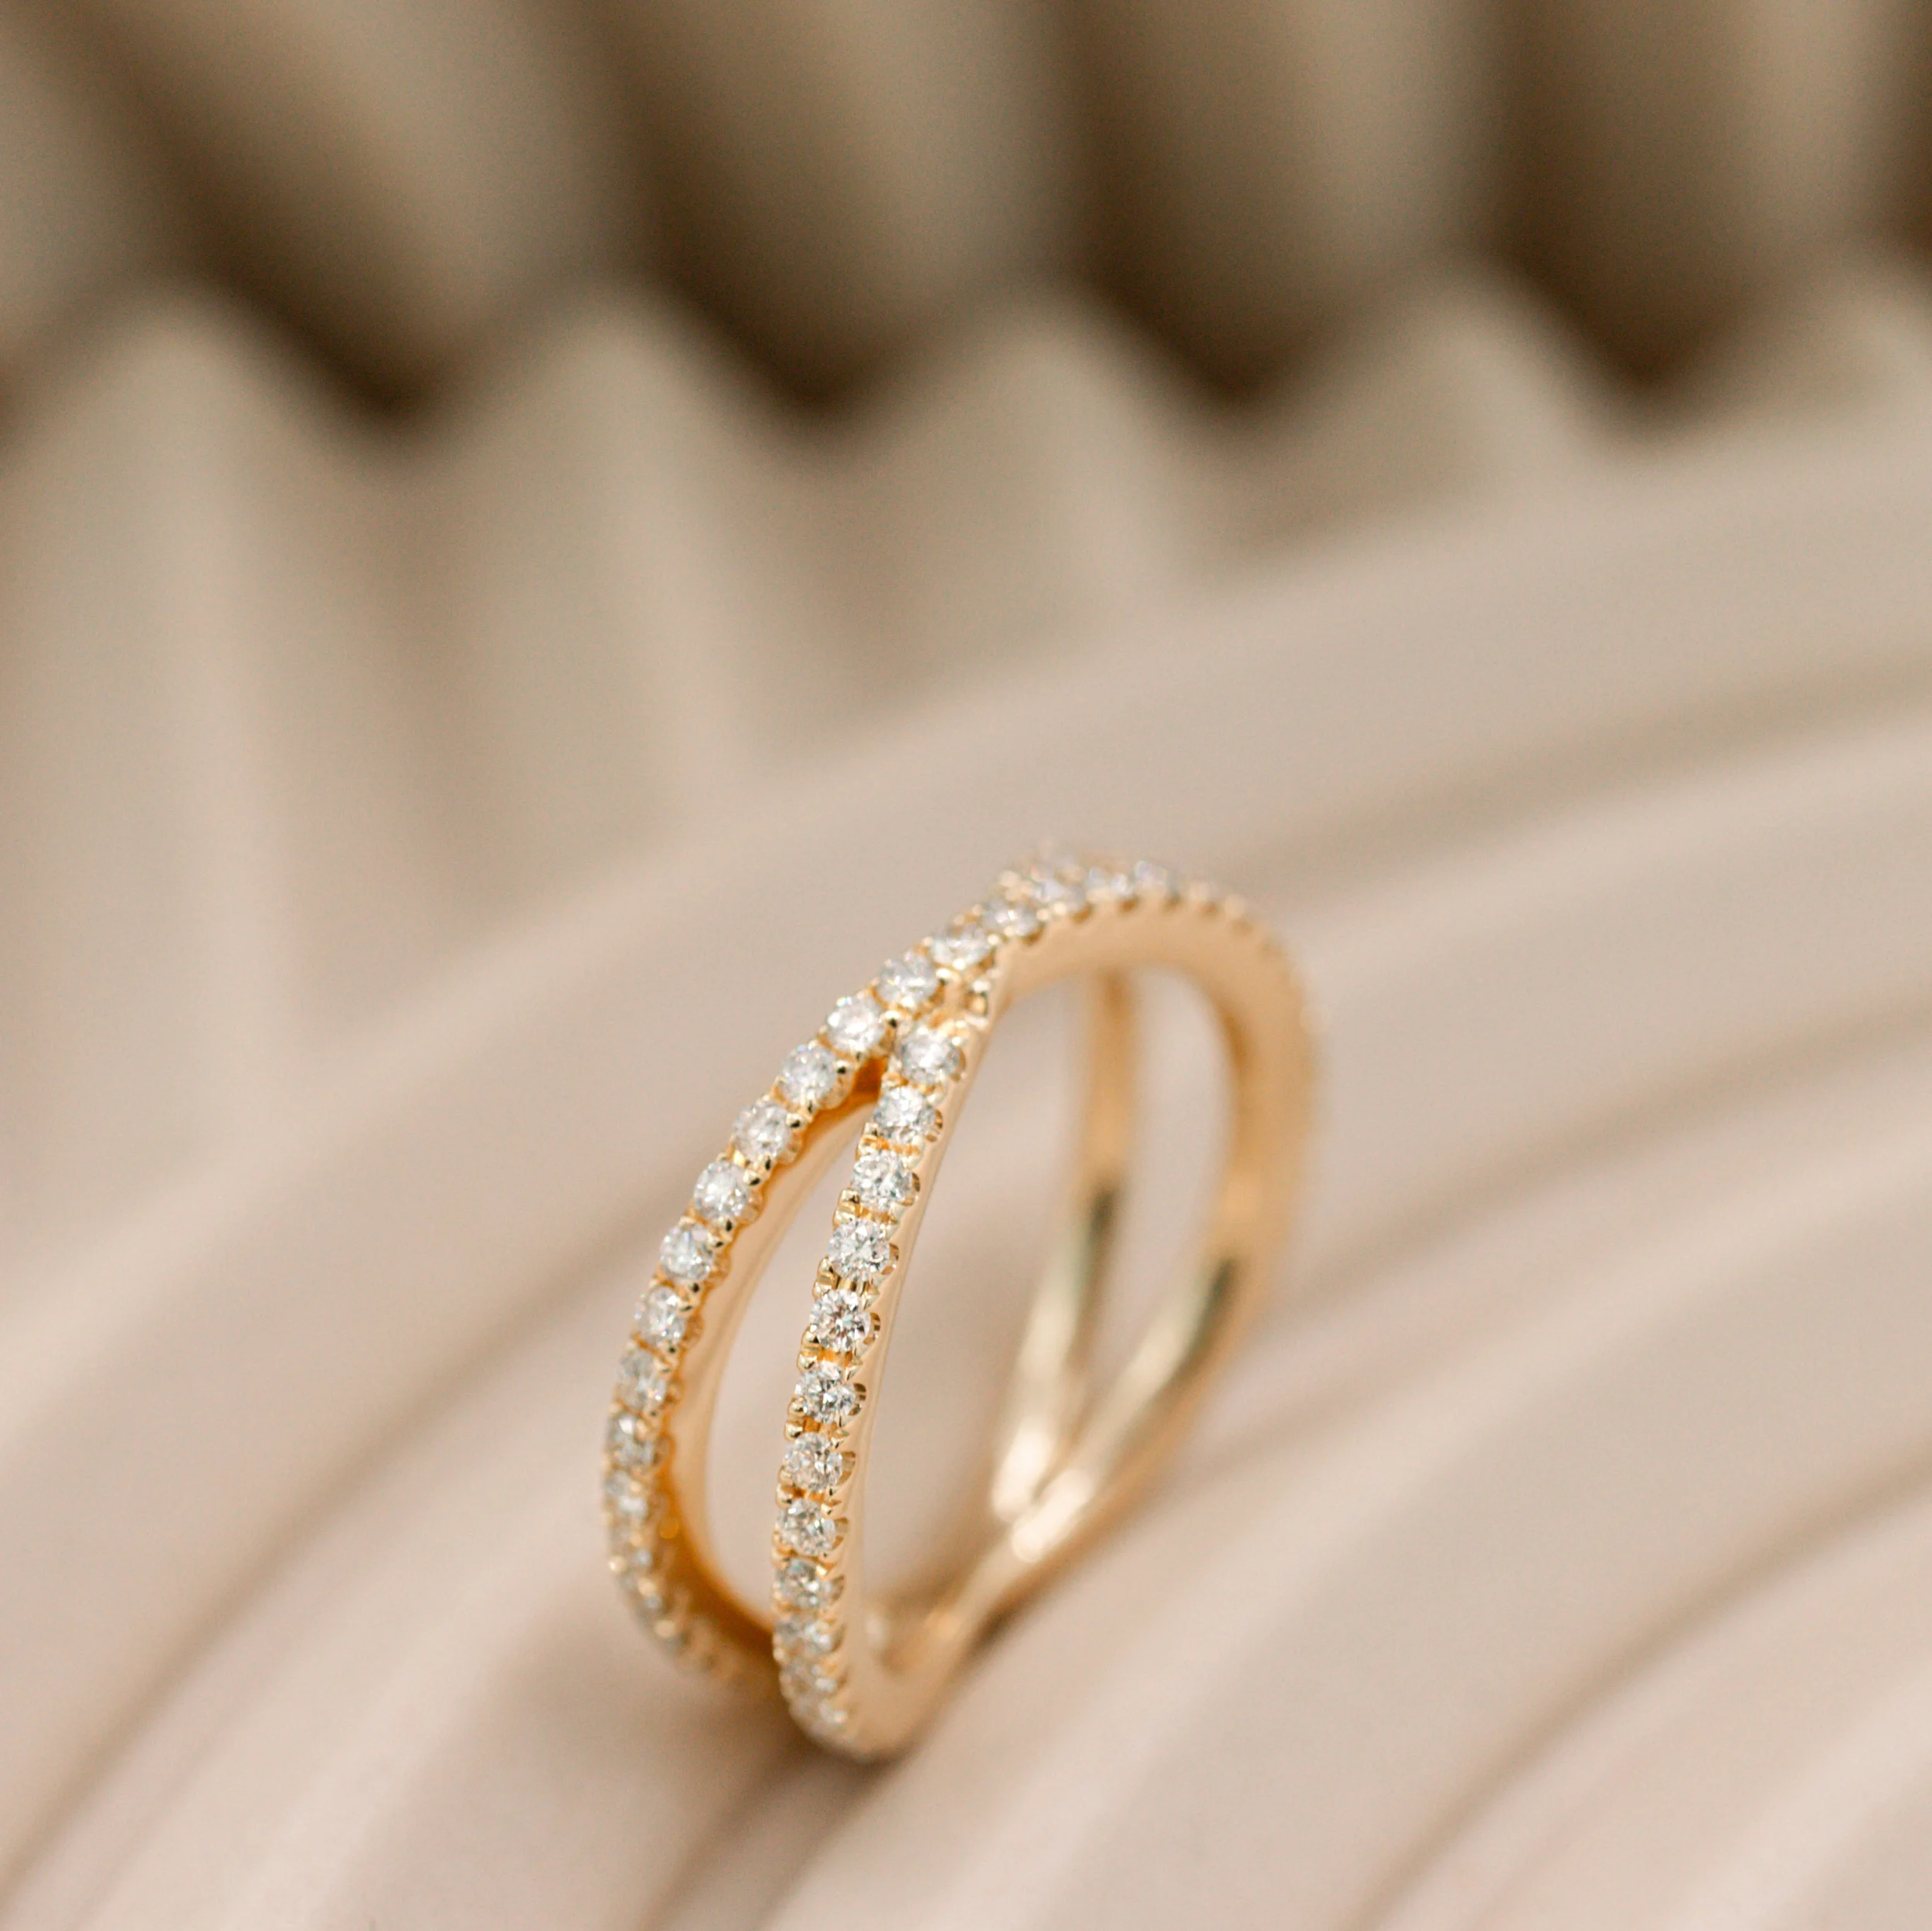 0.6 Carat Round Lab Diamonds set in 14k Yellow Gold X Wedding Band (Profile View)